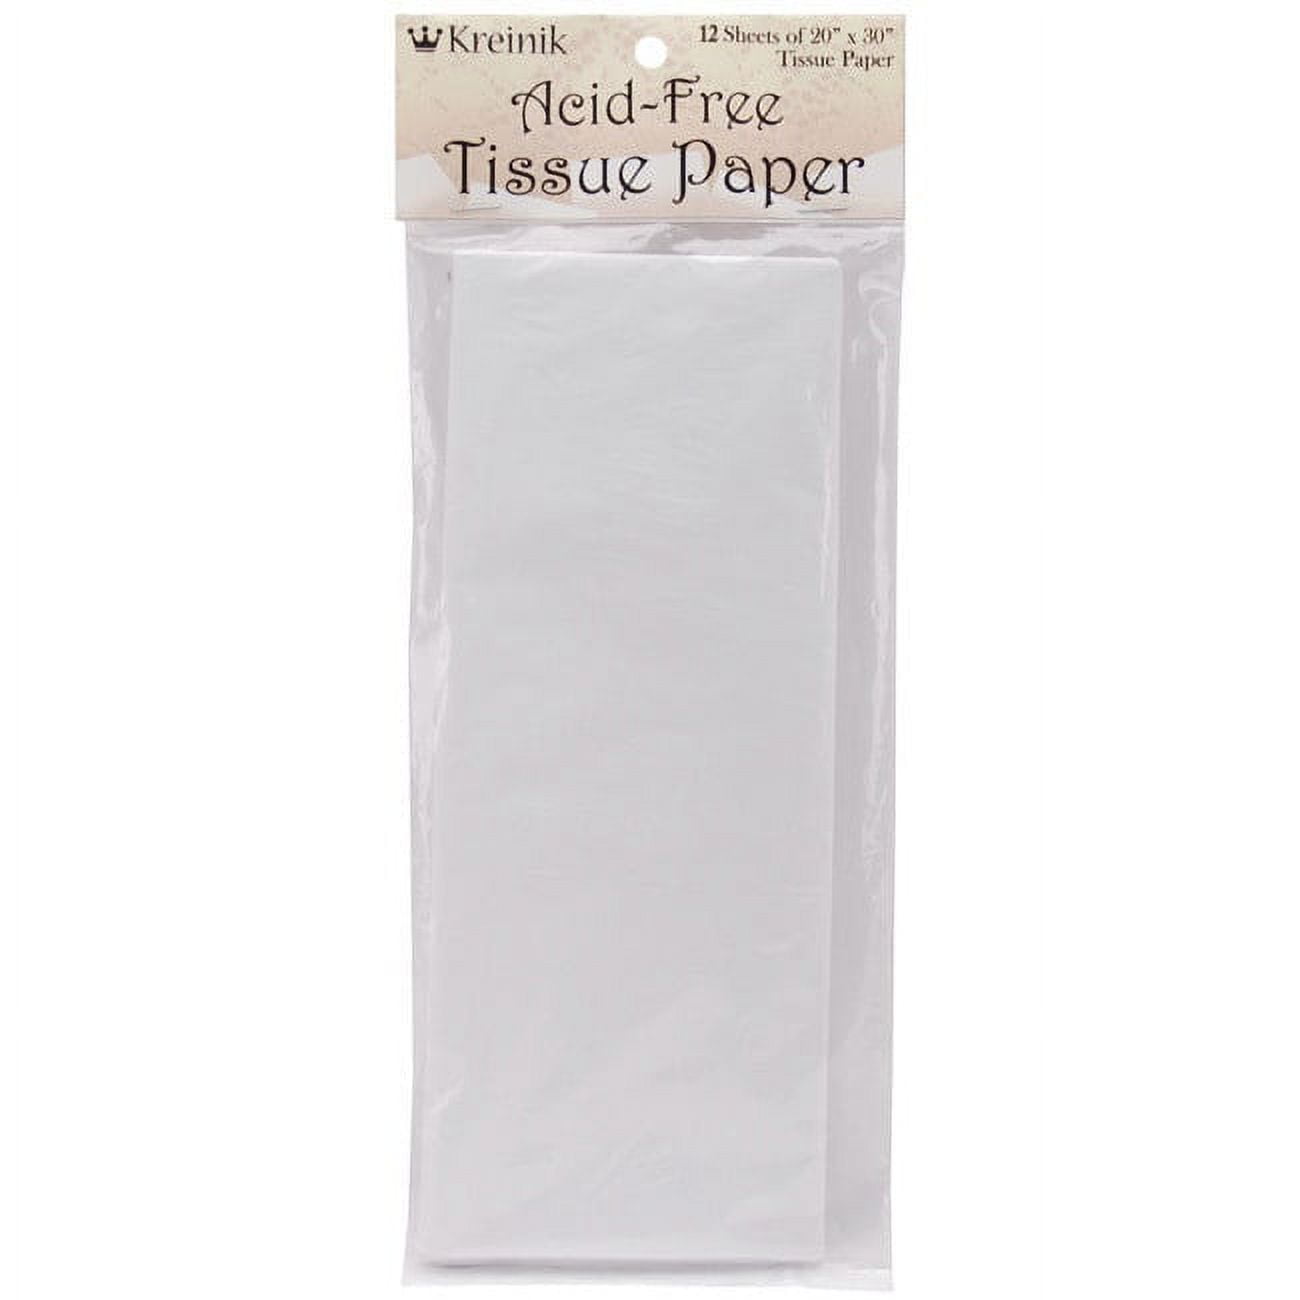 Acid-Free Tissue Paper Sheets - 24 x 36 - ULINE - Bundle of 100 Sheets - S-23031